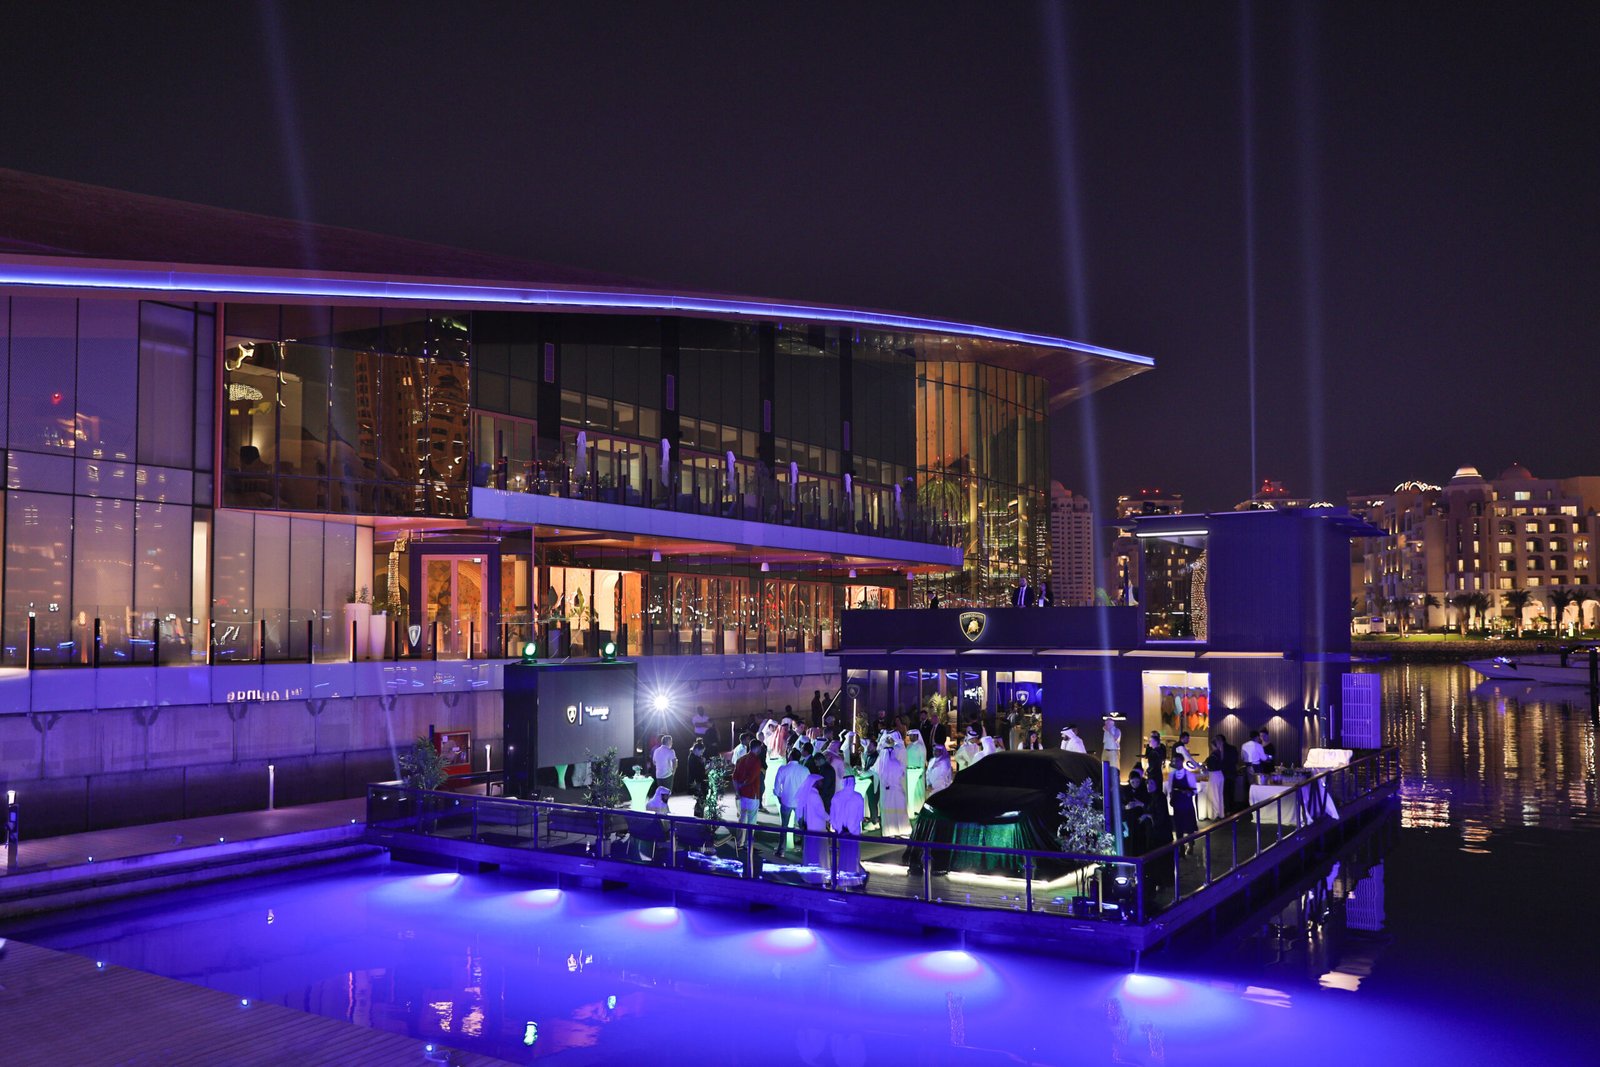 Opening of Lamborghini Lounge Doha